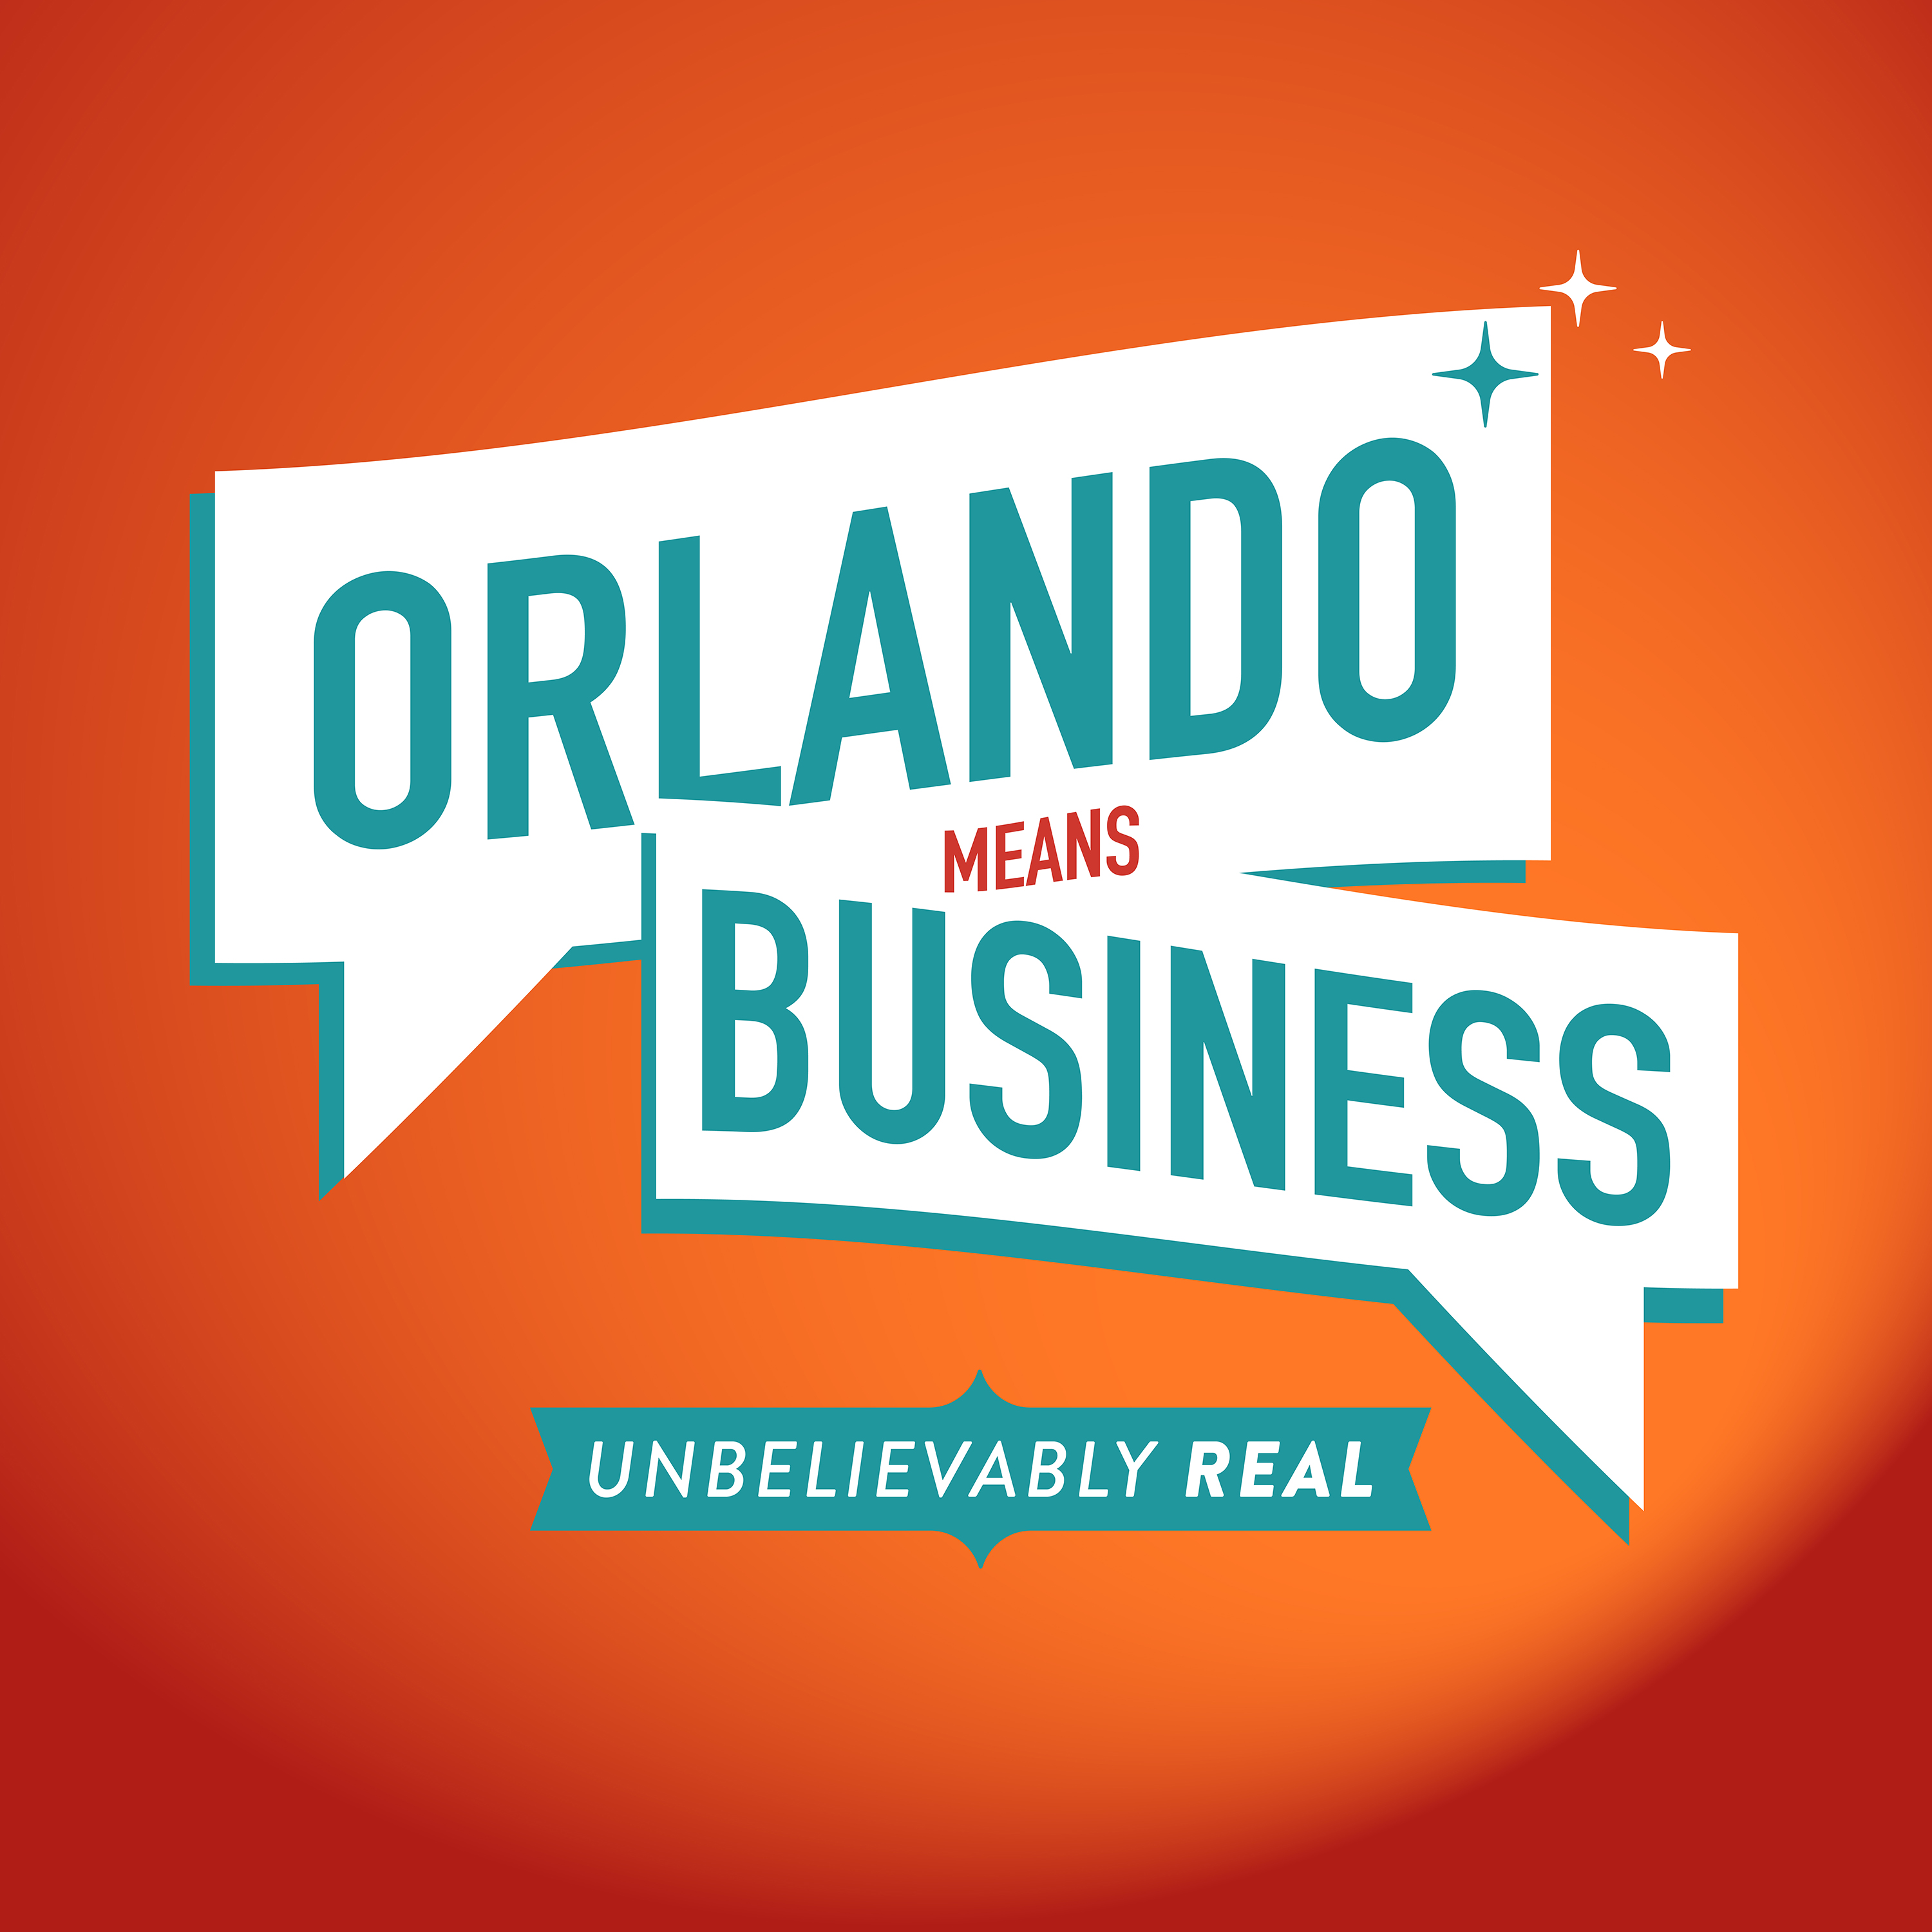 Artwork for Orlando Means Business